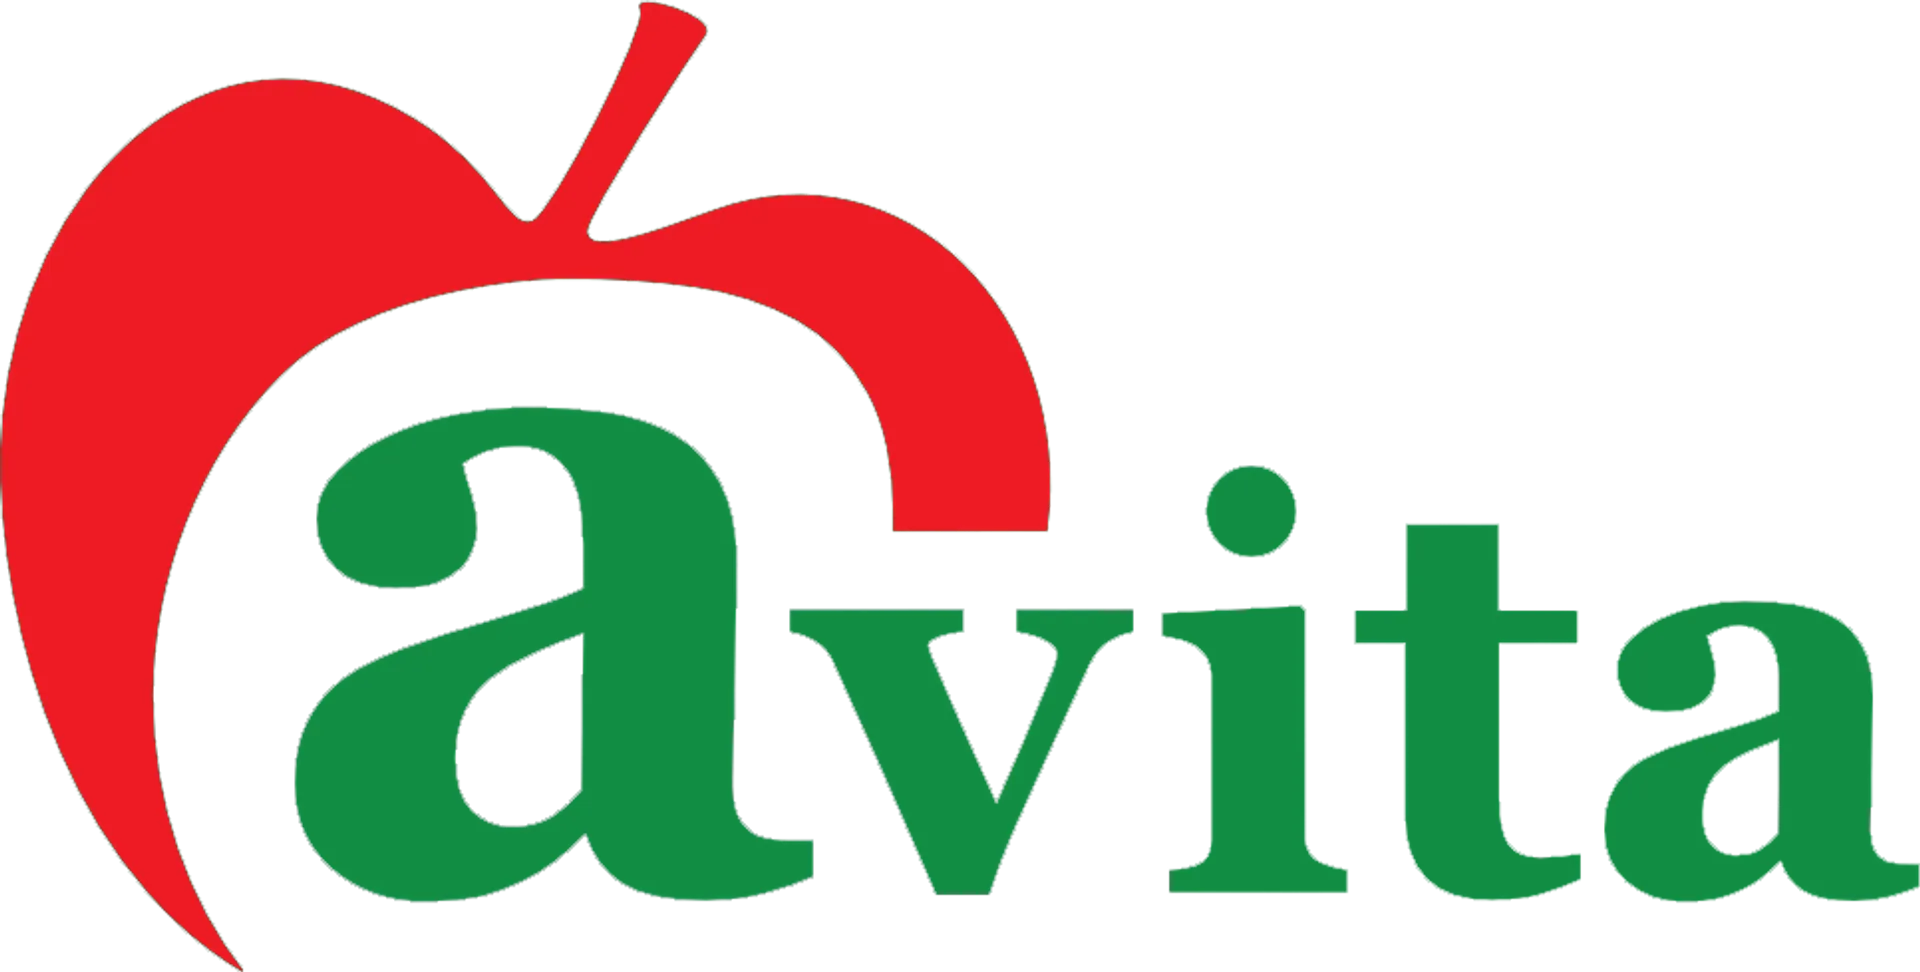 AVITA logo